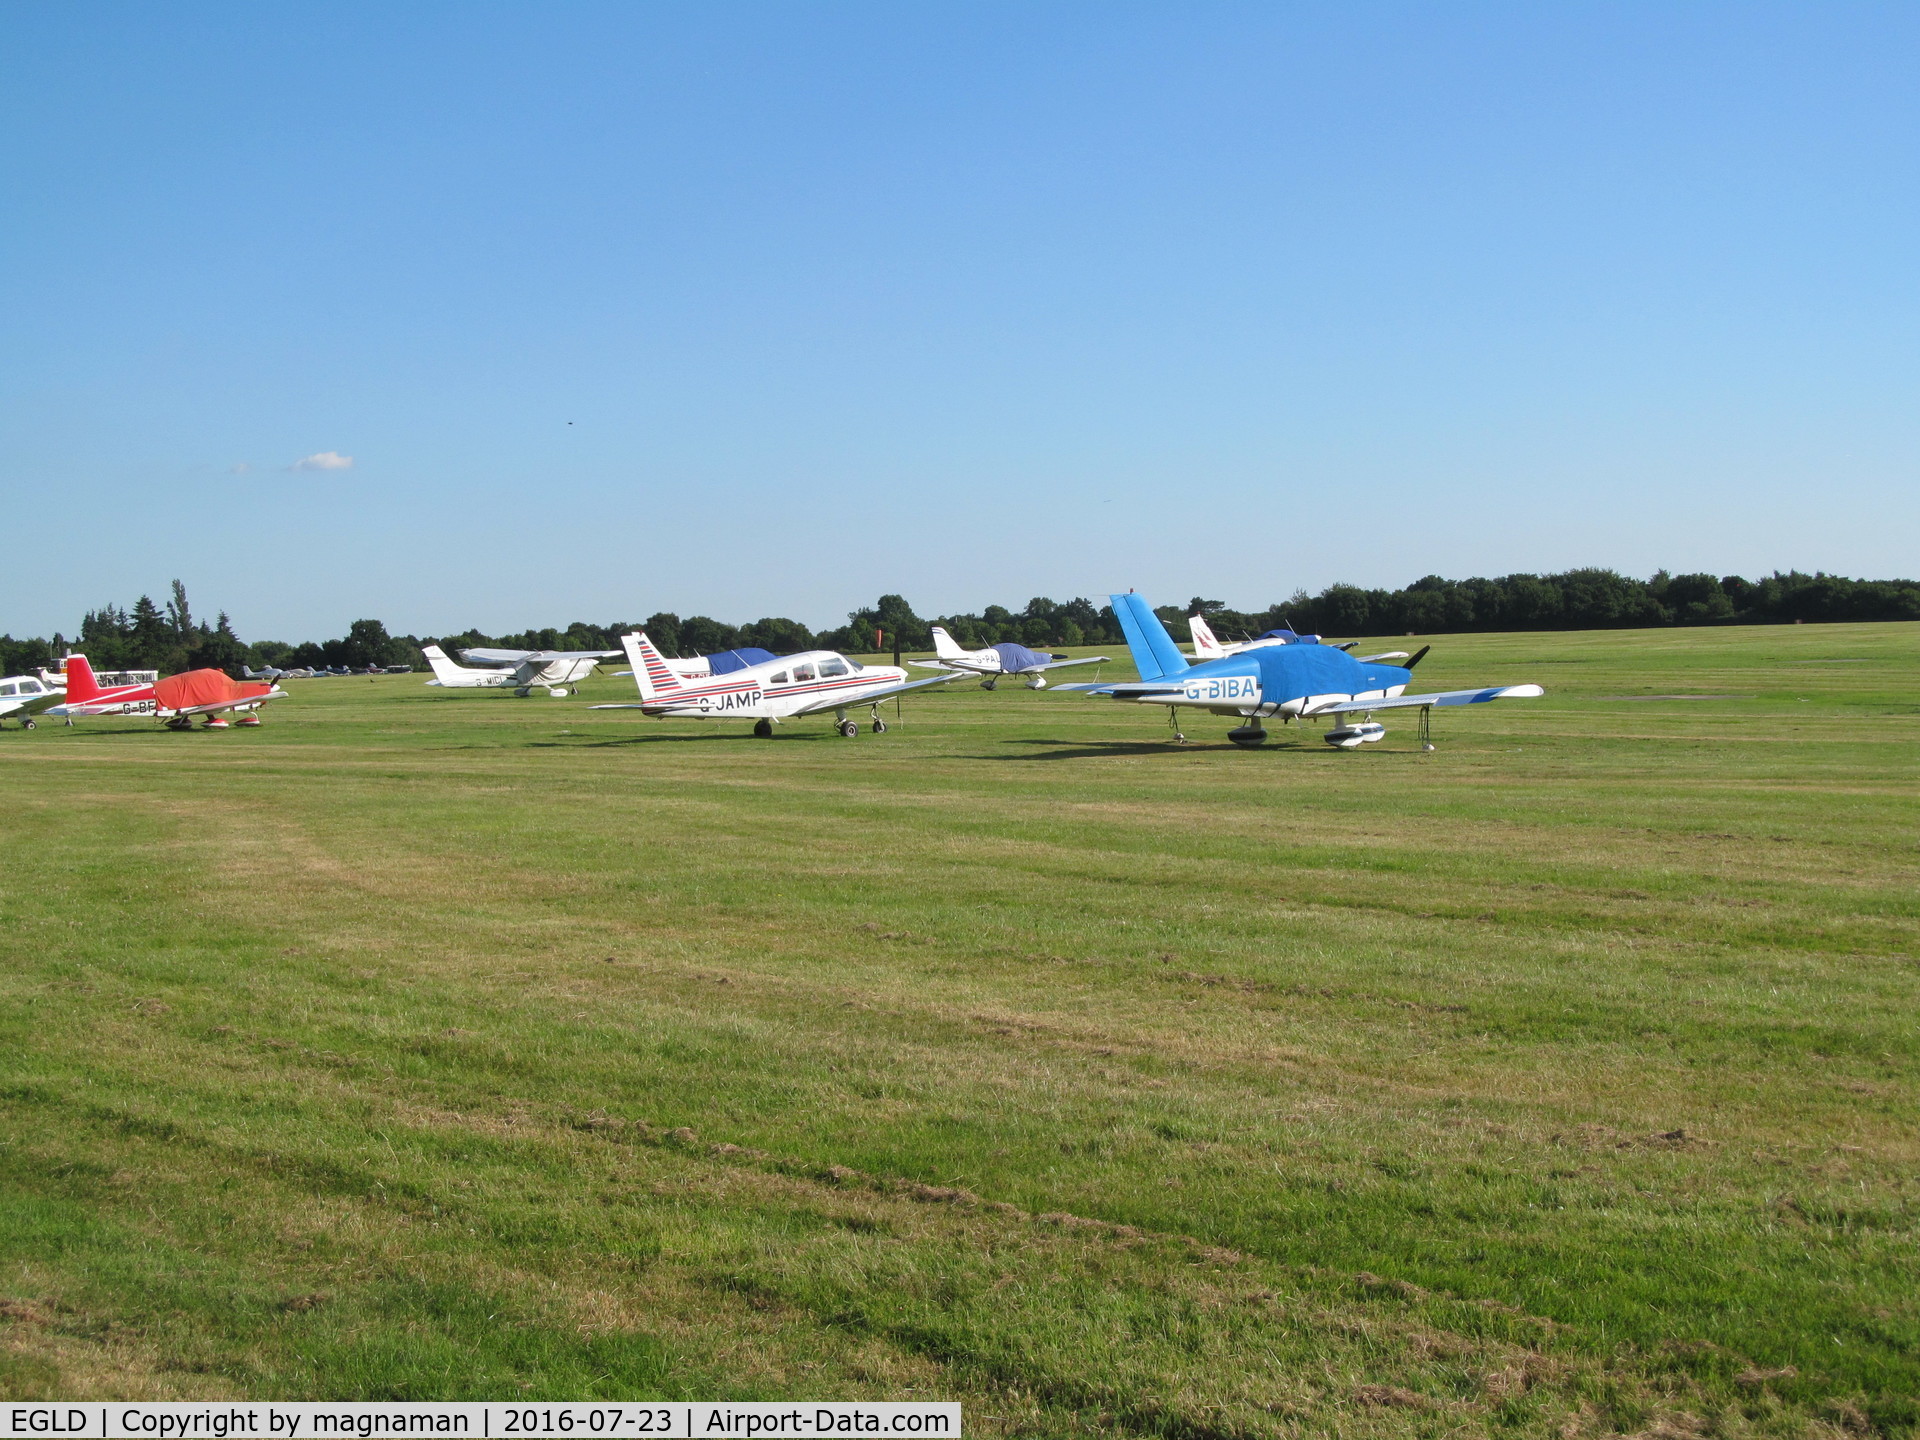 Denham Aerodrome Airport, Gerrards Cross, England United Kingdom (EGLD) - g-jamp plus friends on west grass apron